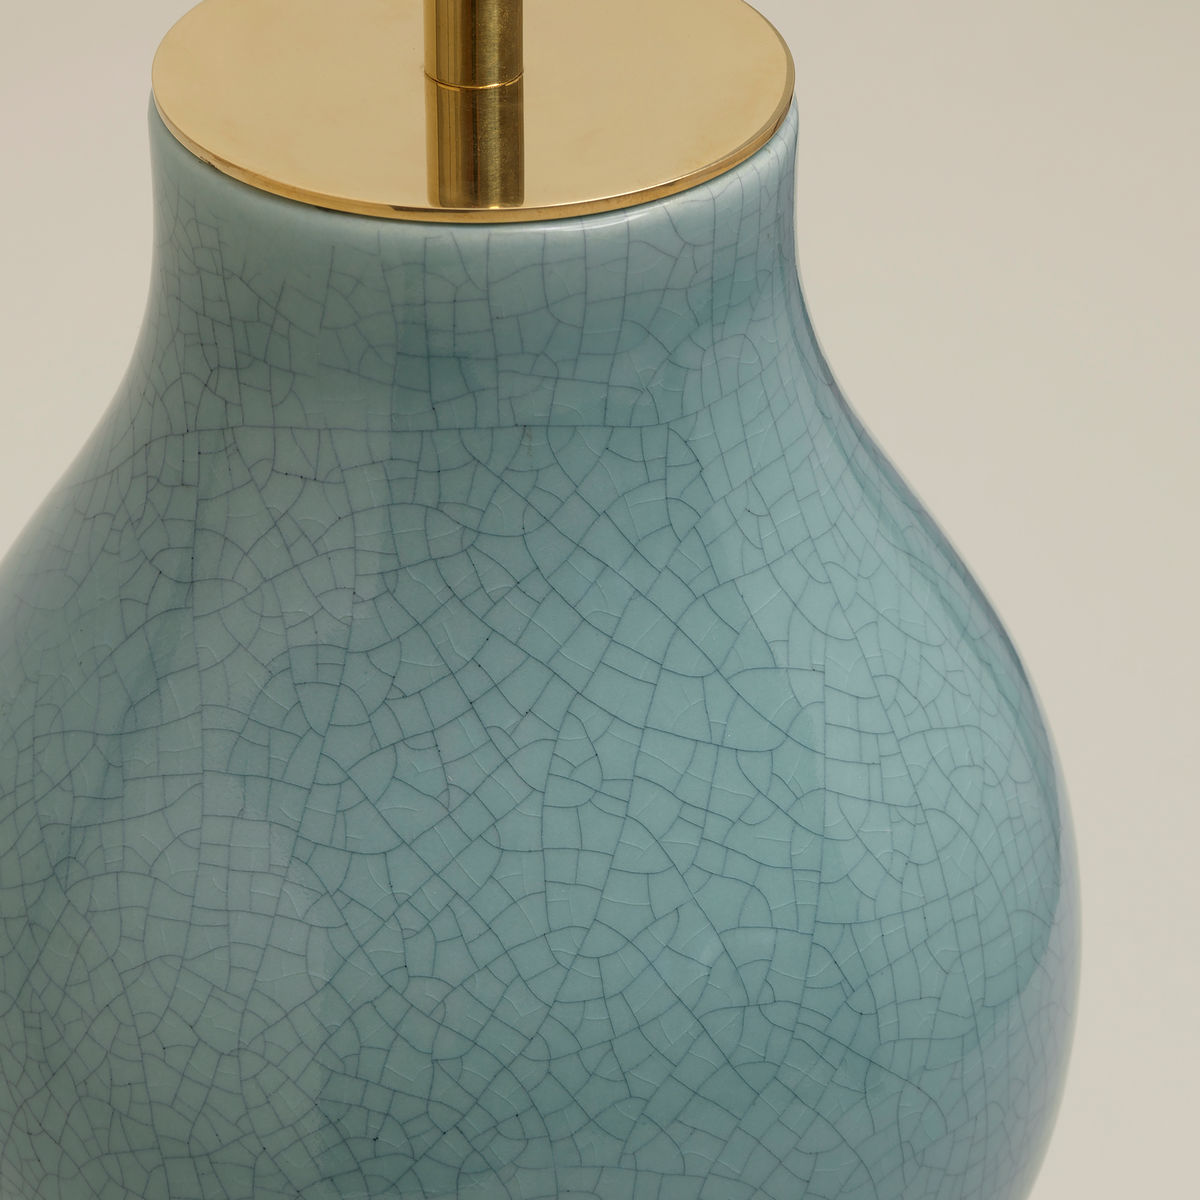 Detail of Gourd Shaped Vase Table Lamp in Crackled Duck Egg Blue